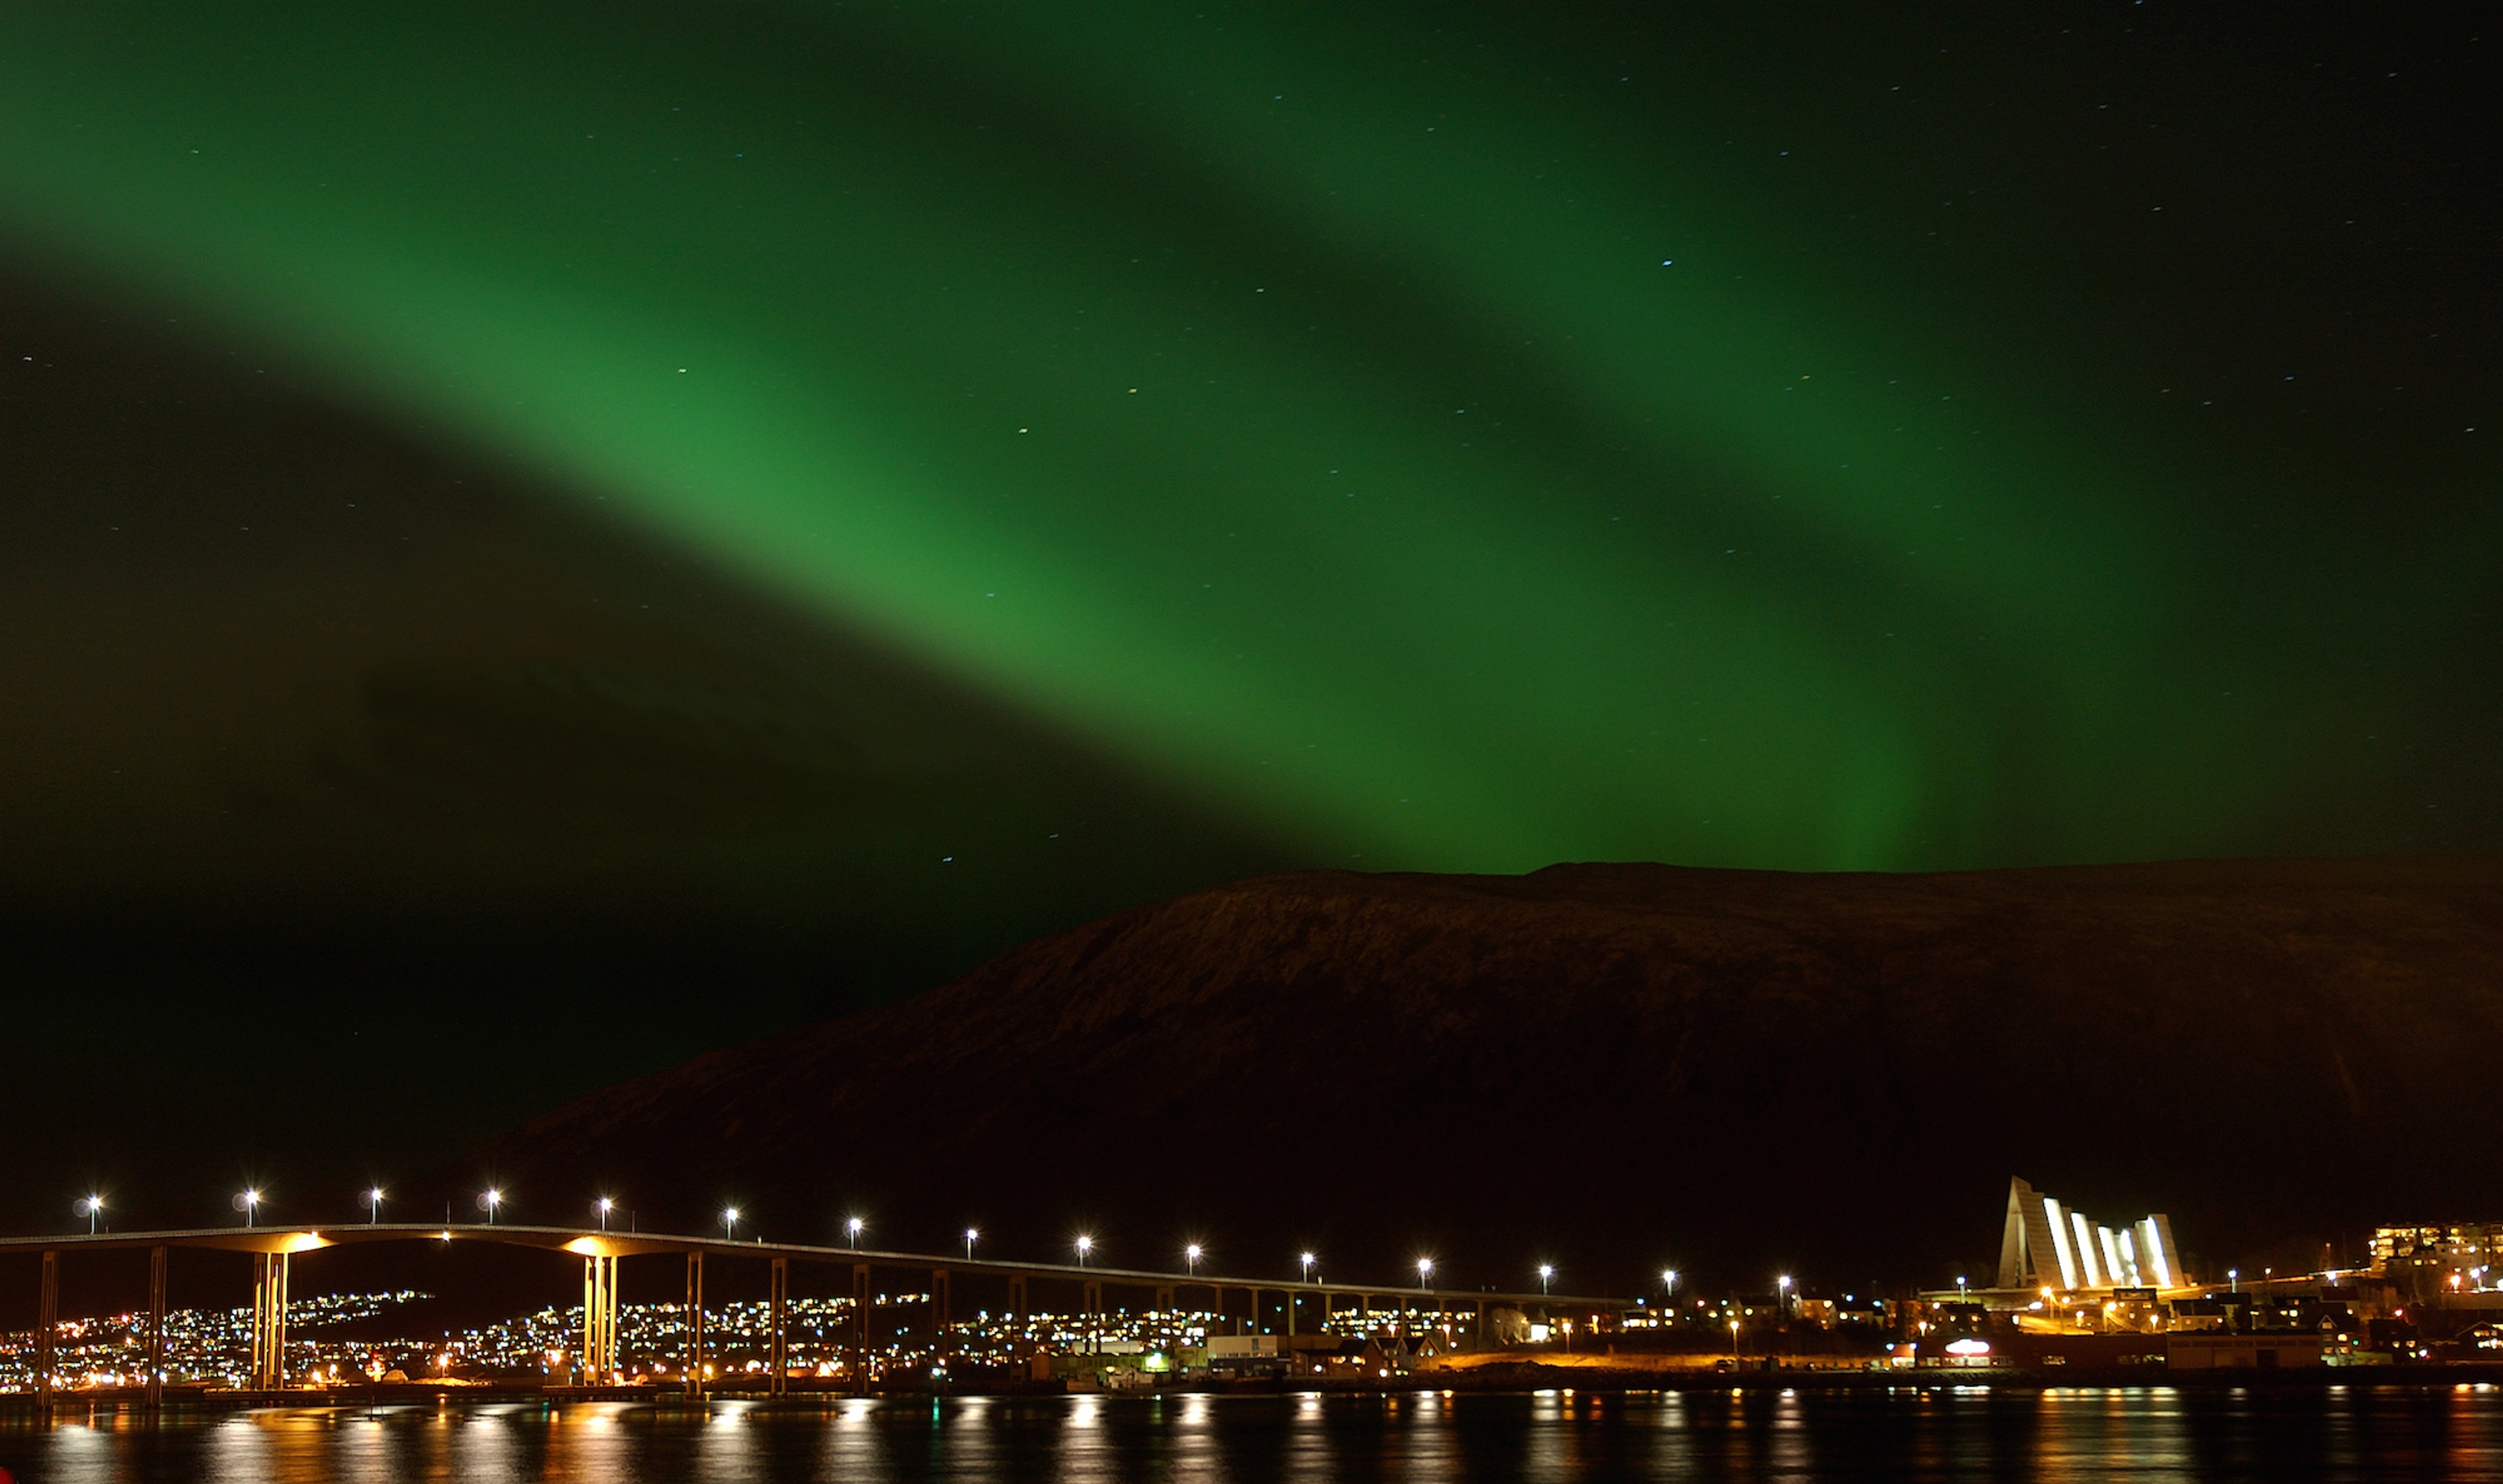 Northern Lights over Tromsø - Norway